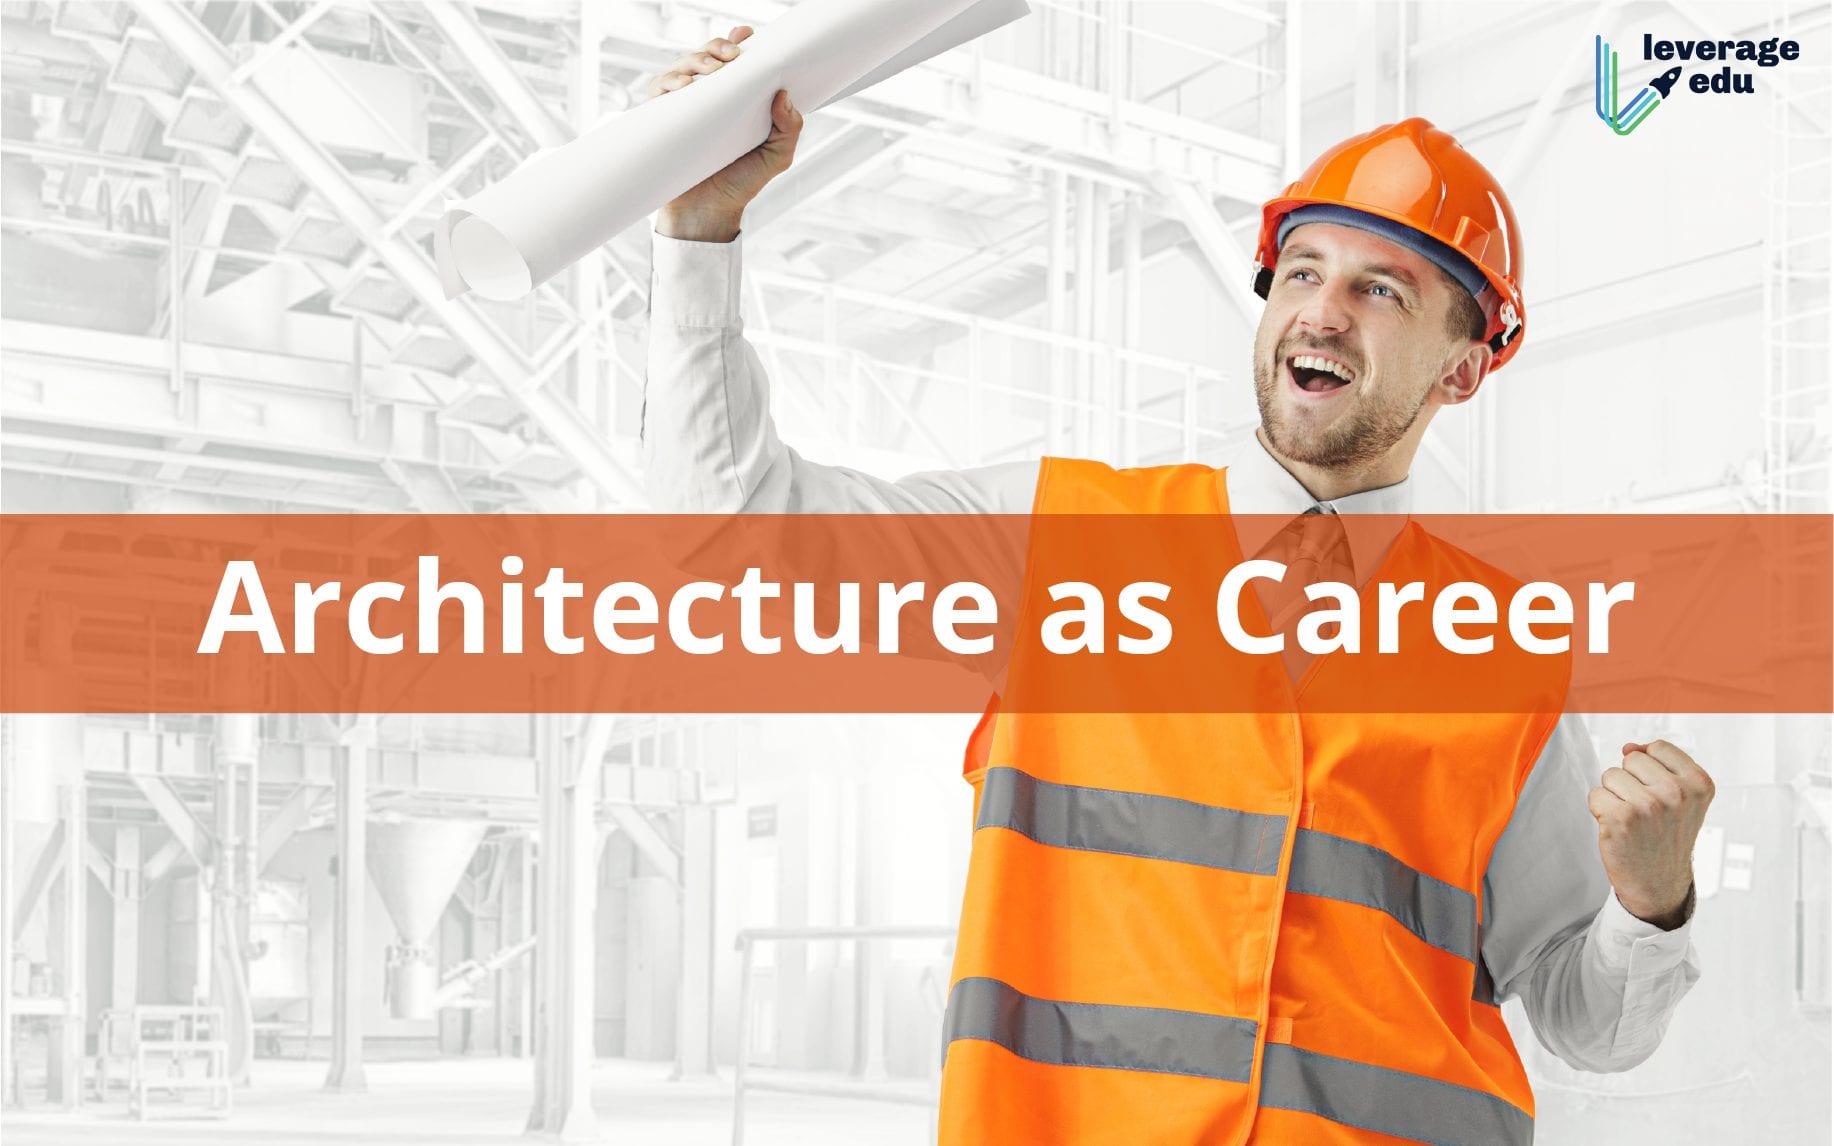 Let's Explore Architecture as Career - Leverage Edu